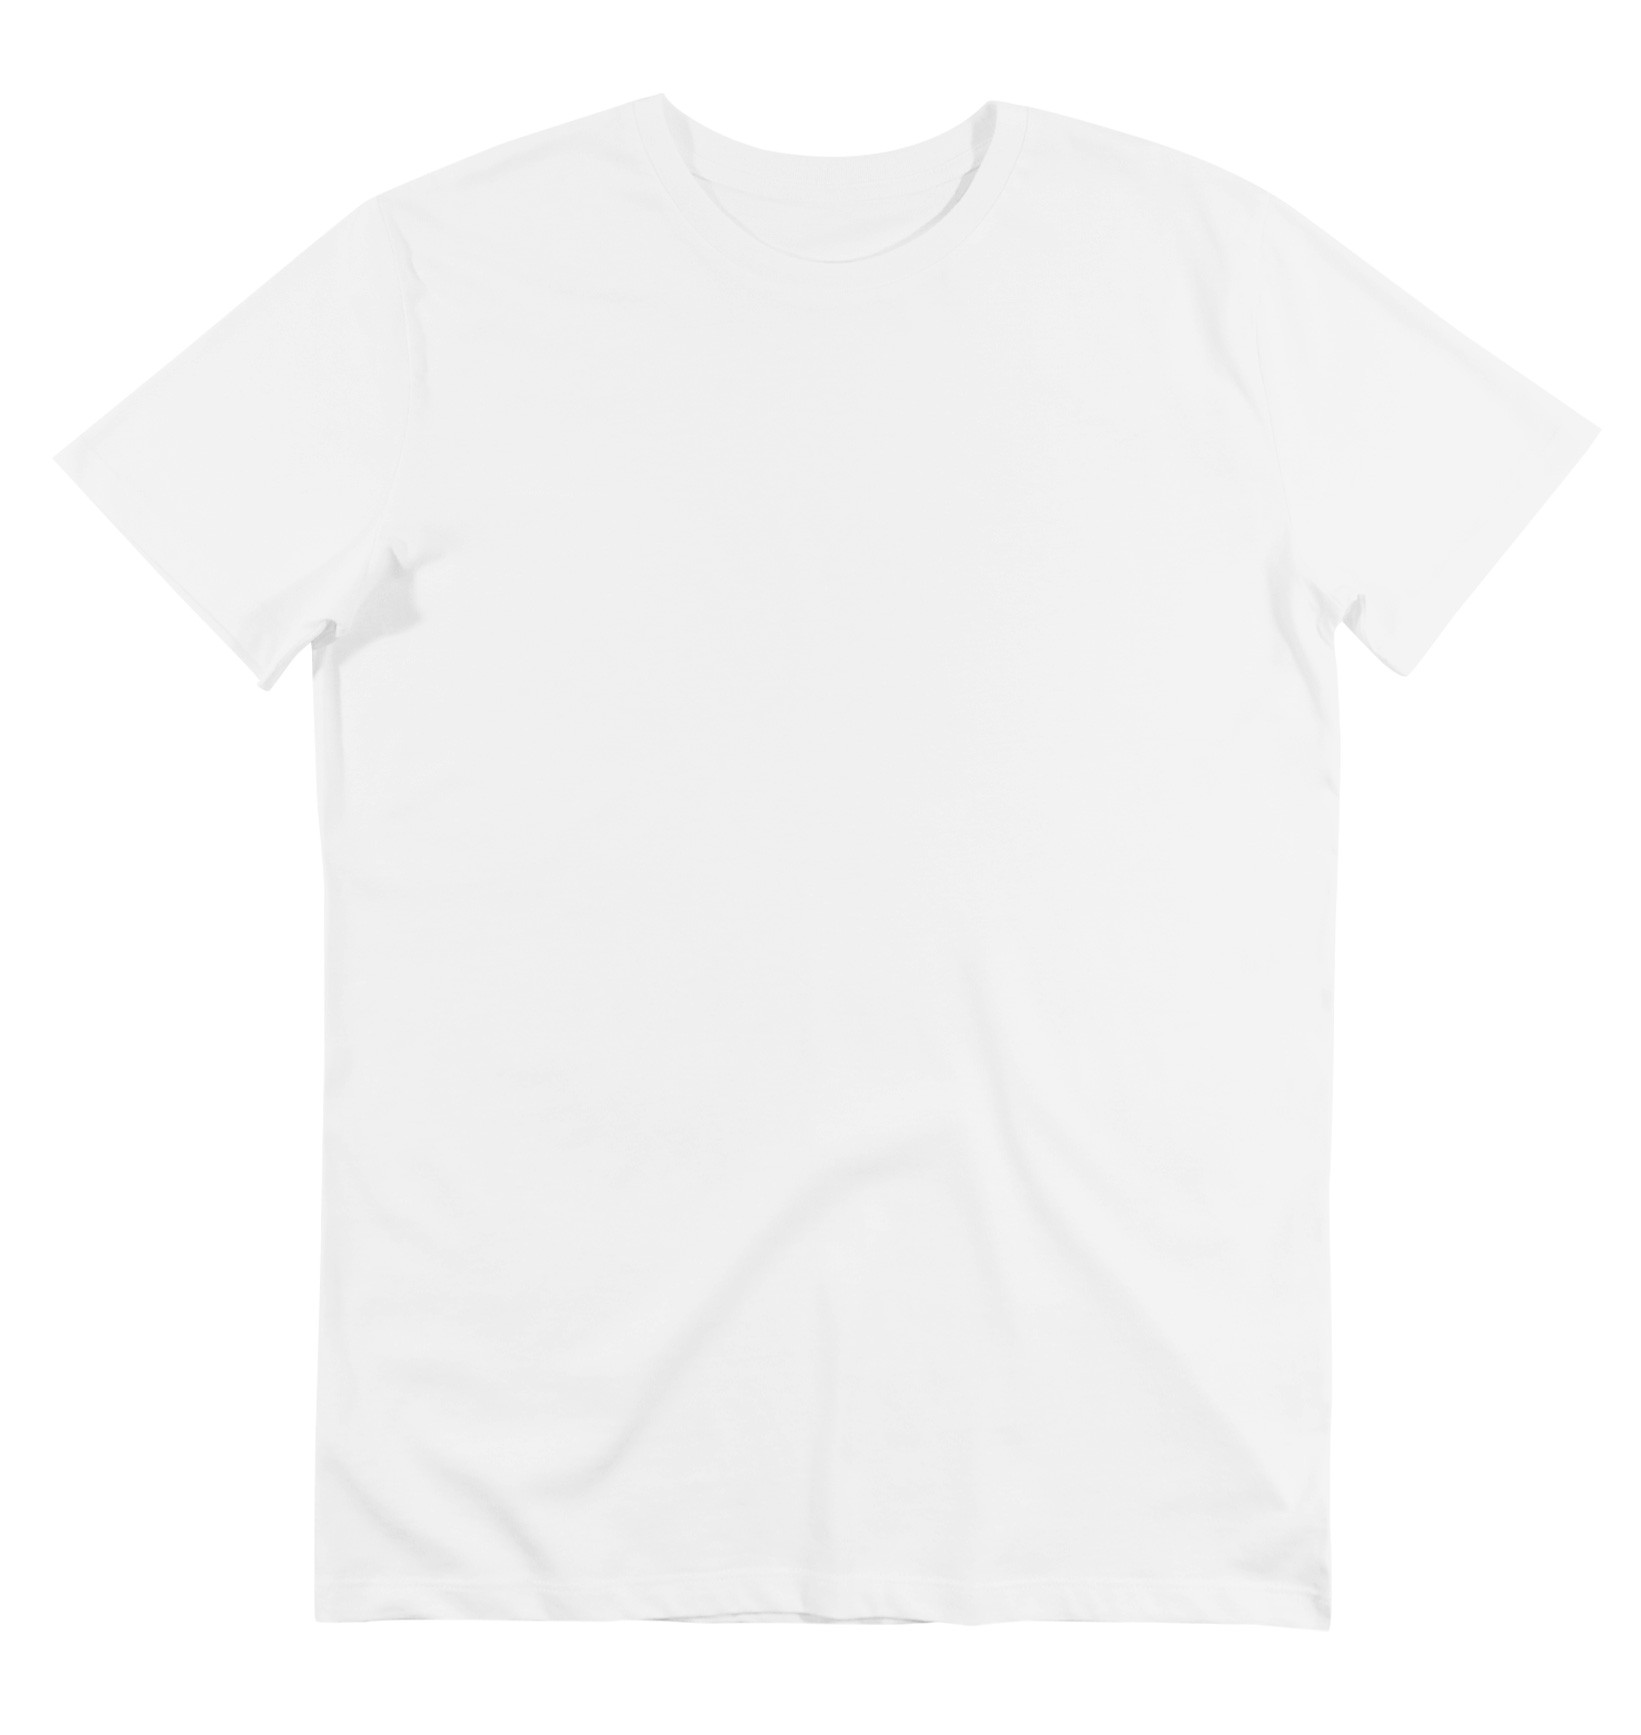 Buy t shirt blanc - 53% OFF!